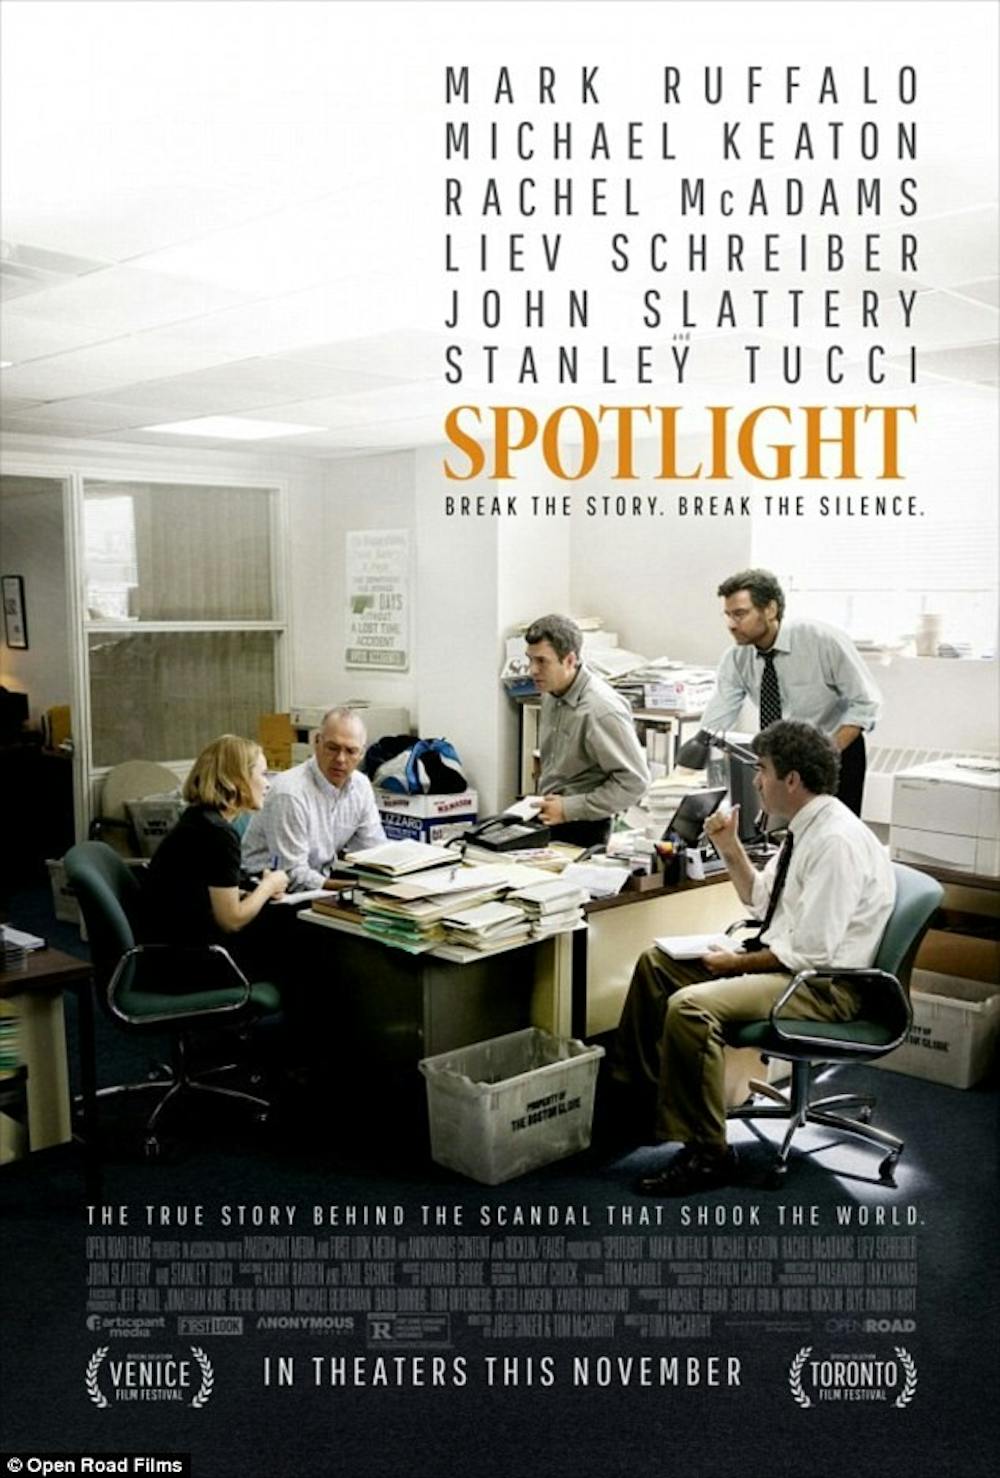 <p>"Spotlight" provides tension and drama alongside harrowing story.</p>